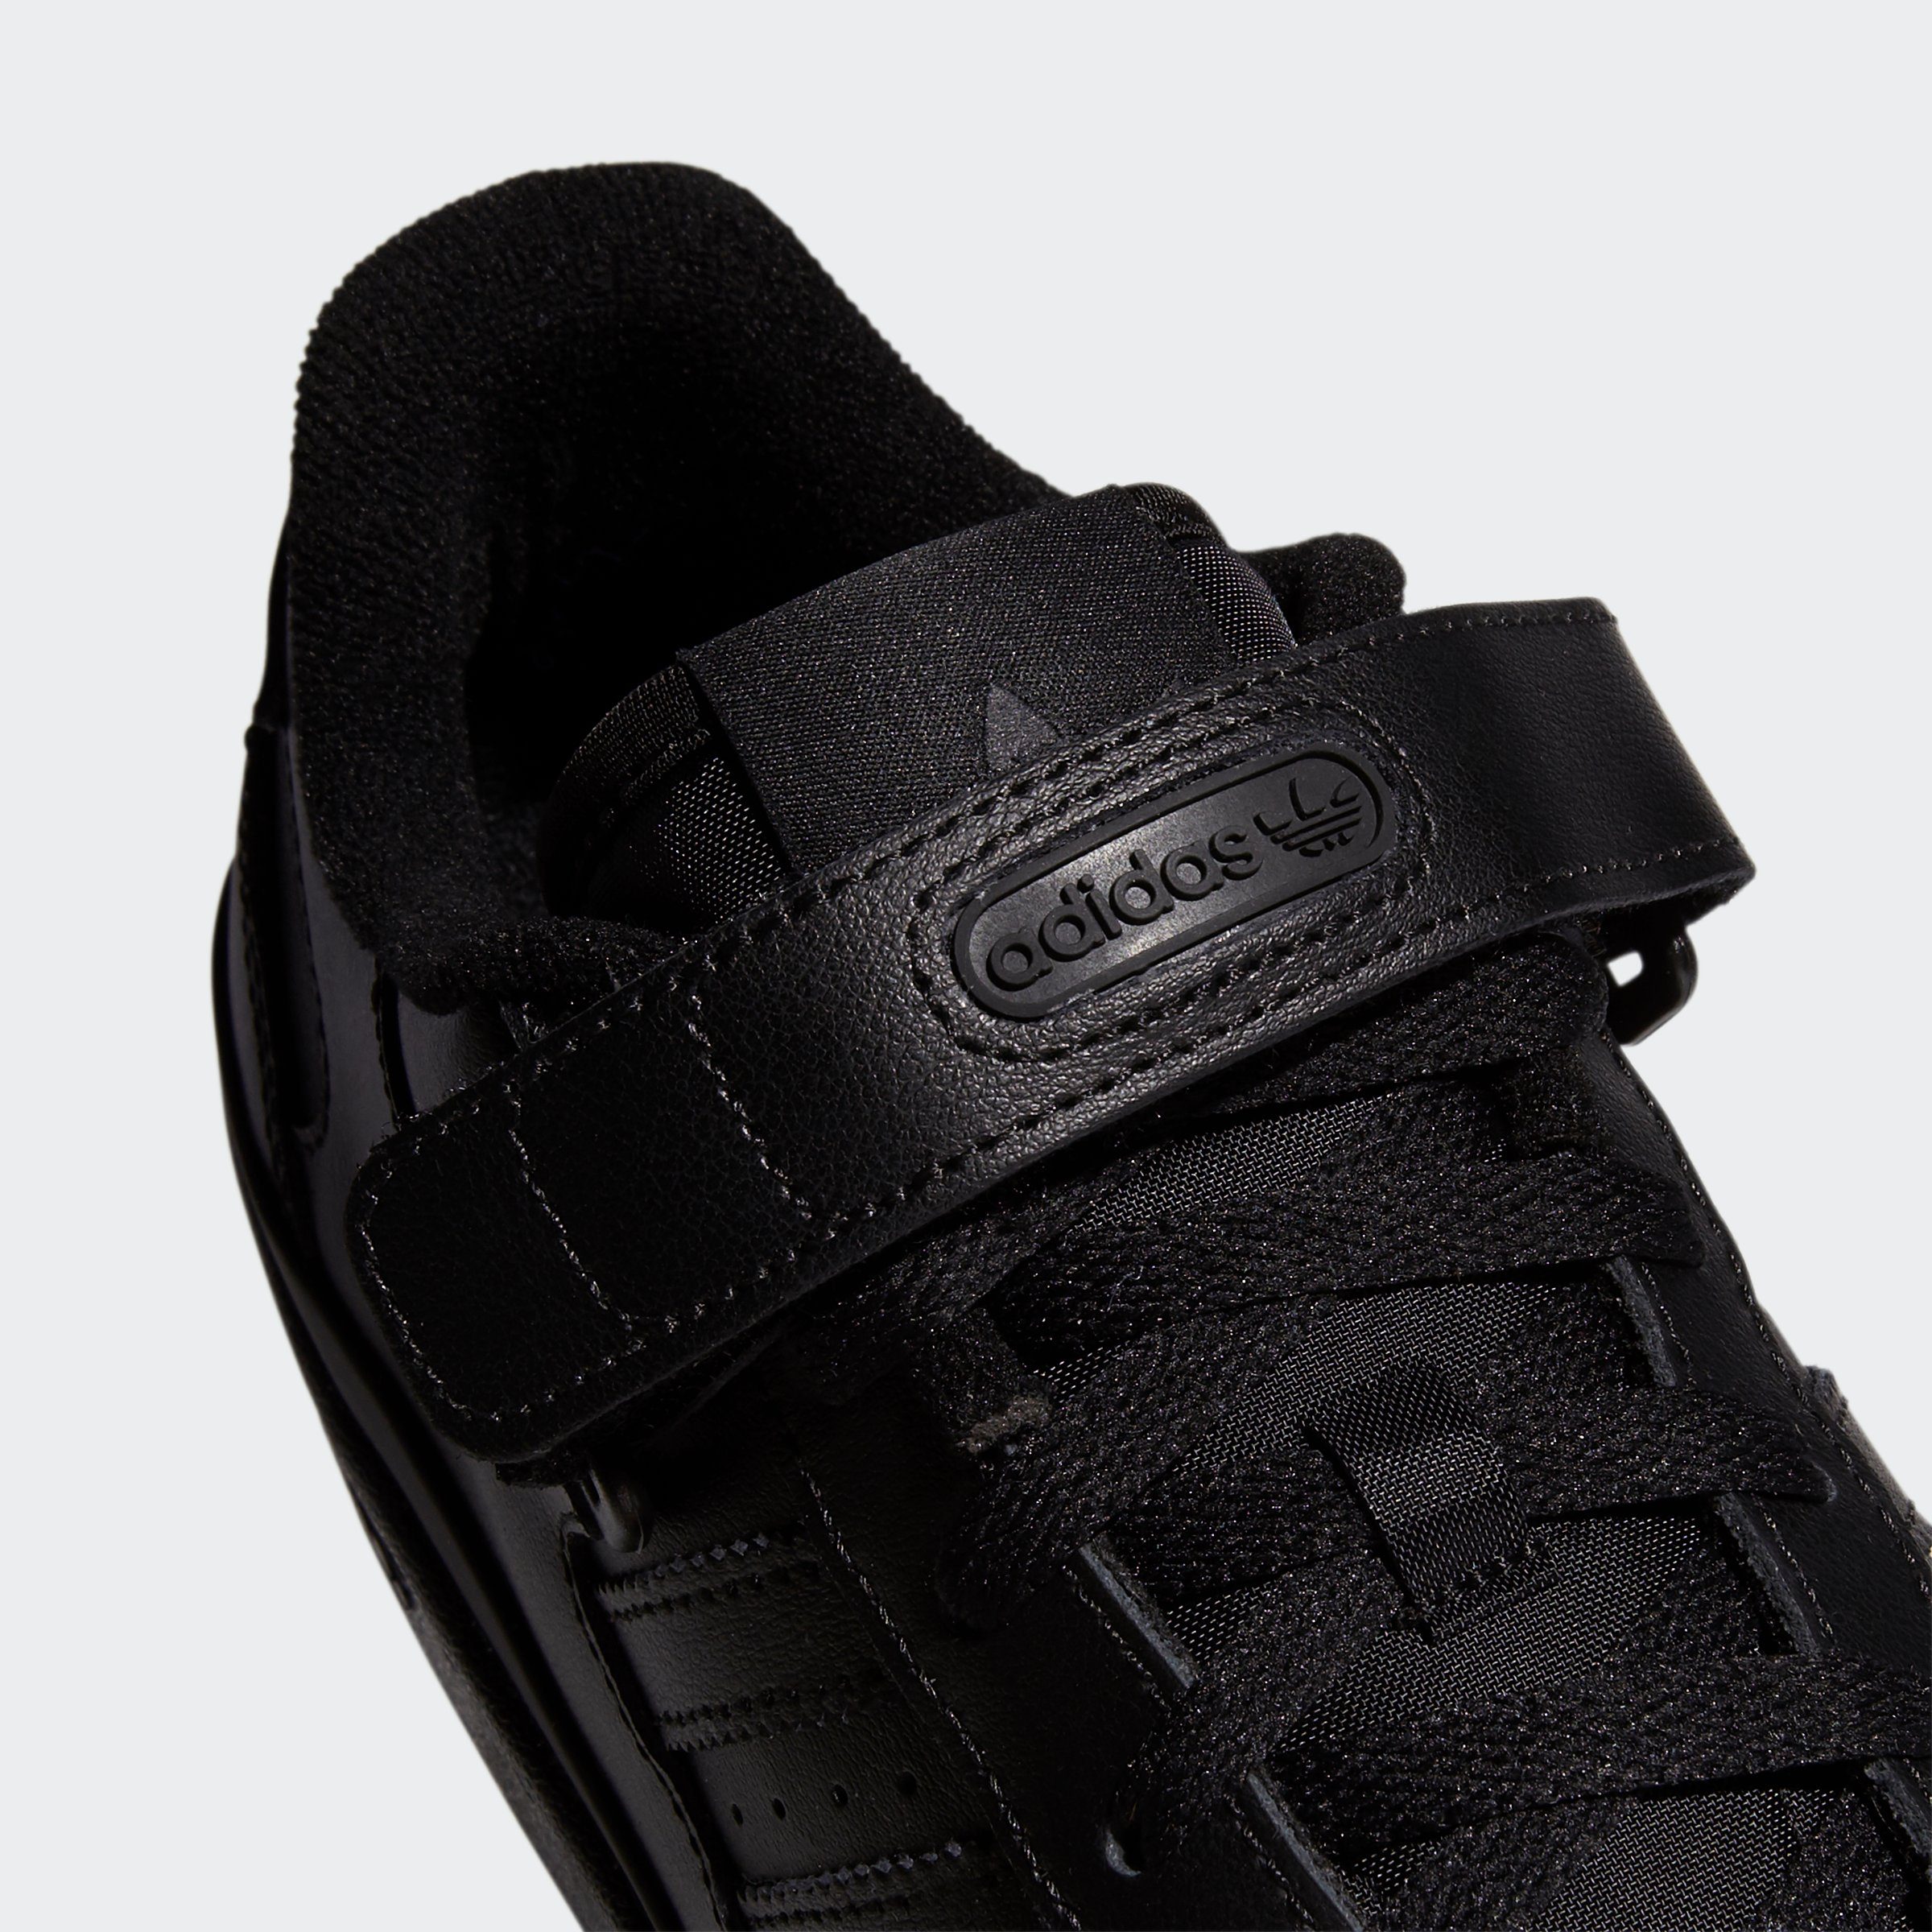 Sneaker FORUM LOW CBLACK/CBLACK/CBLACK adidas Originals